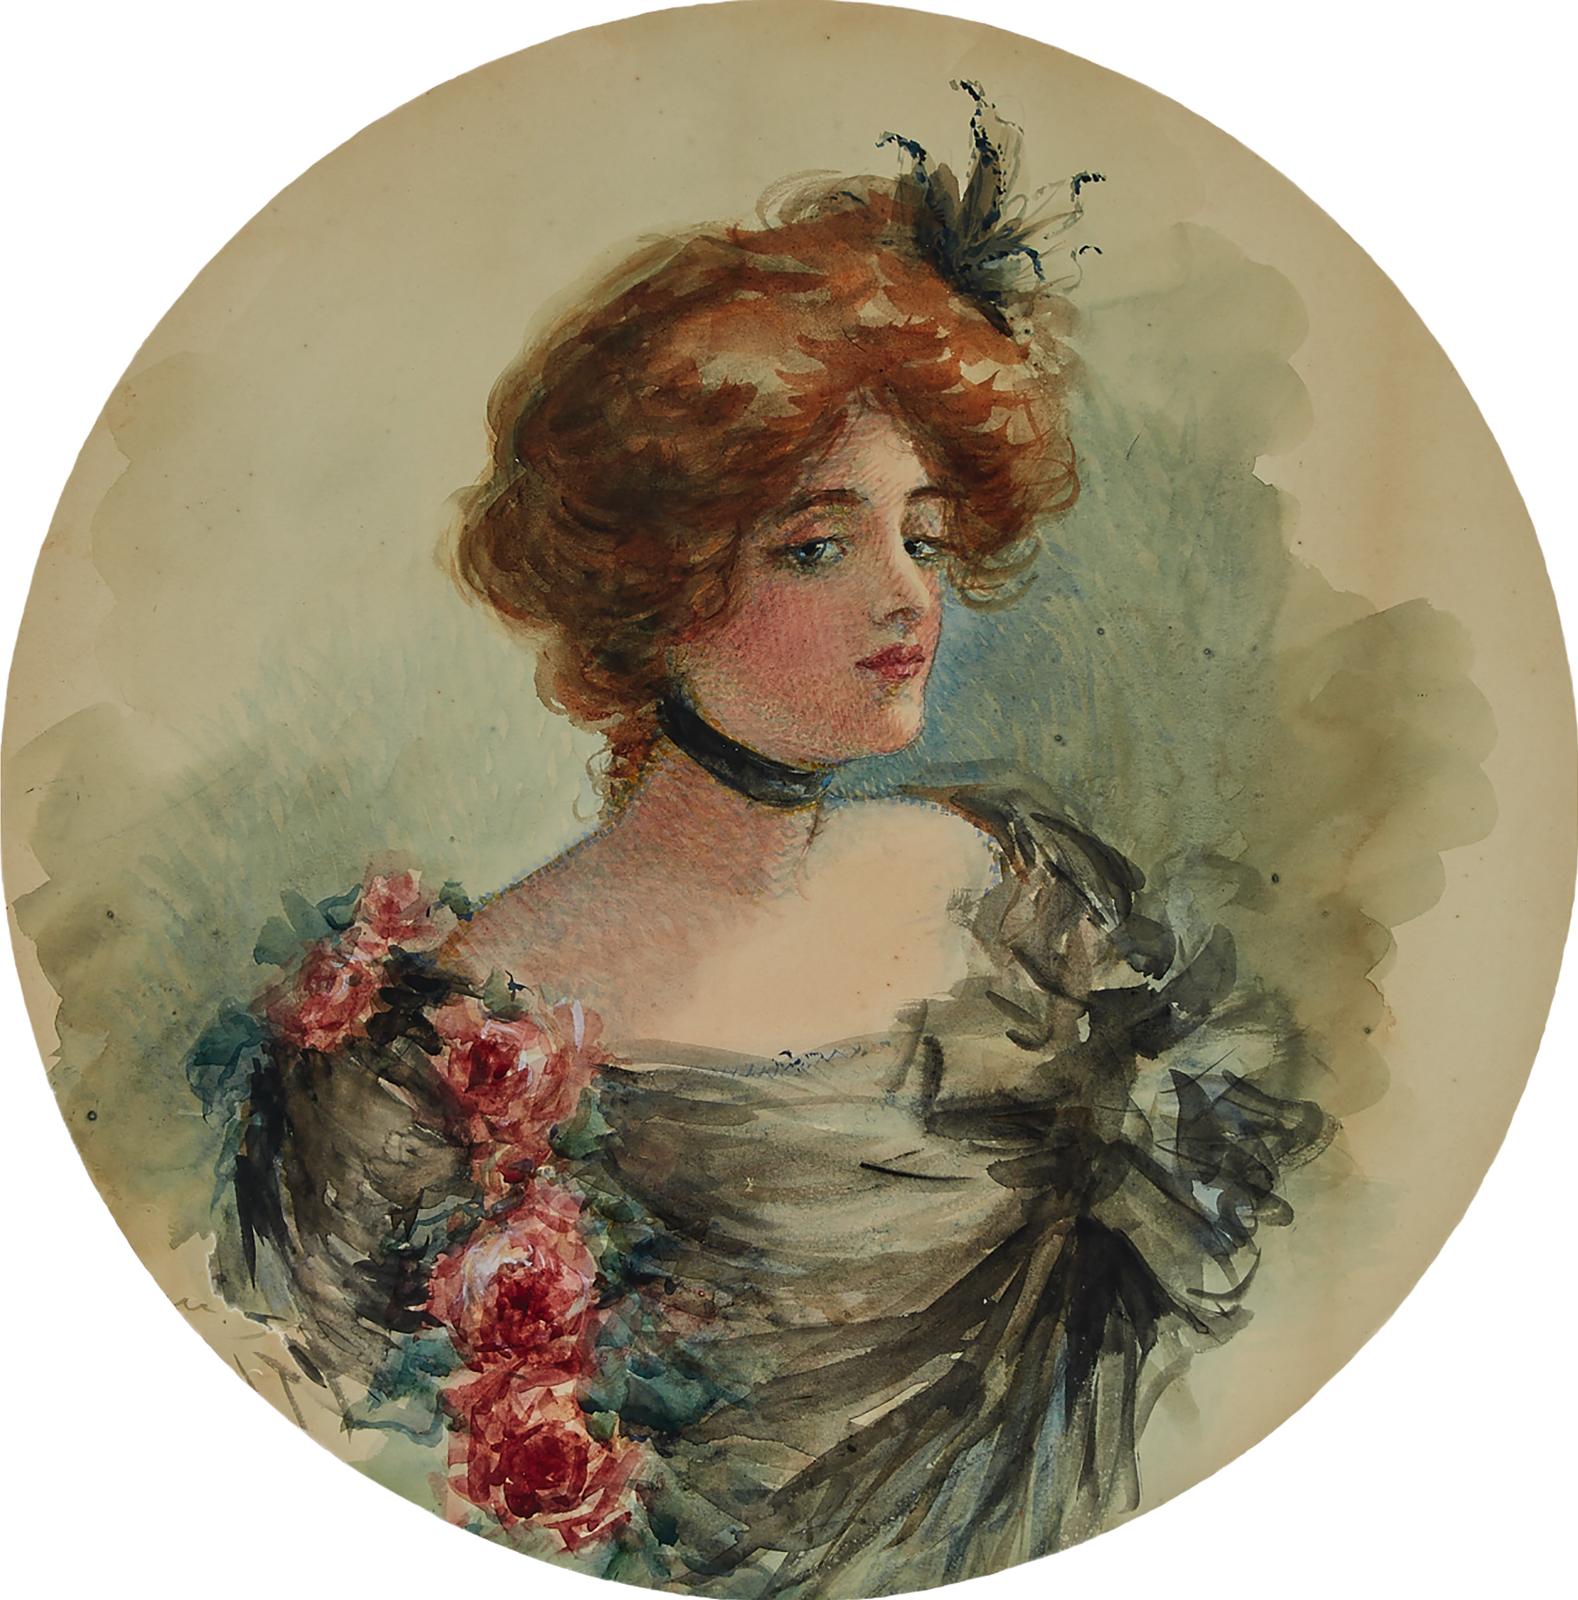 Marianne (Preindlsberger) Stokes (1855-1927) - A Profile Looking Left With Roses; A Profile Looking Right With Roses